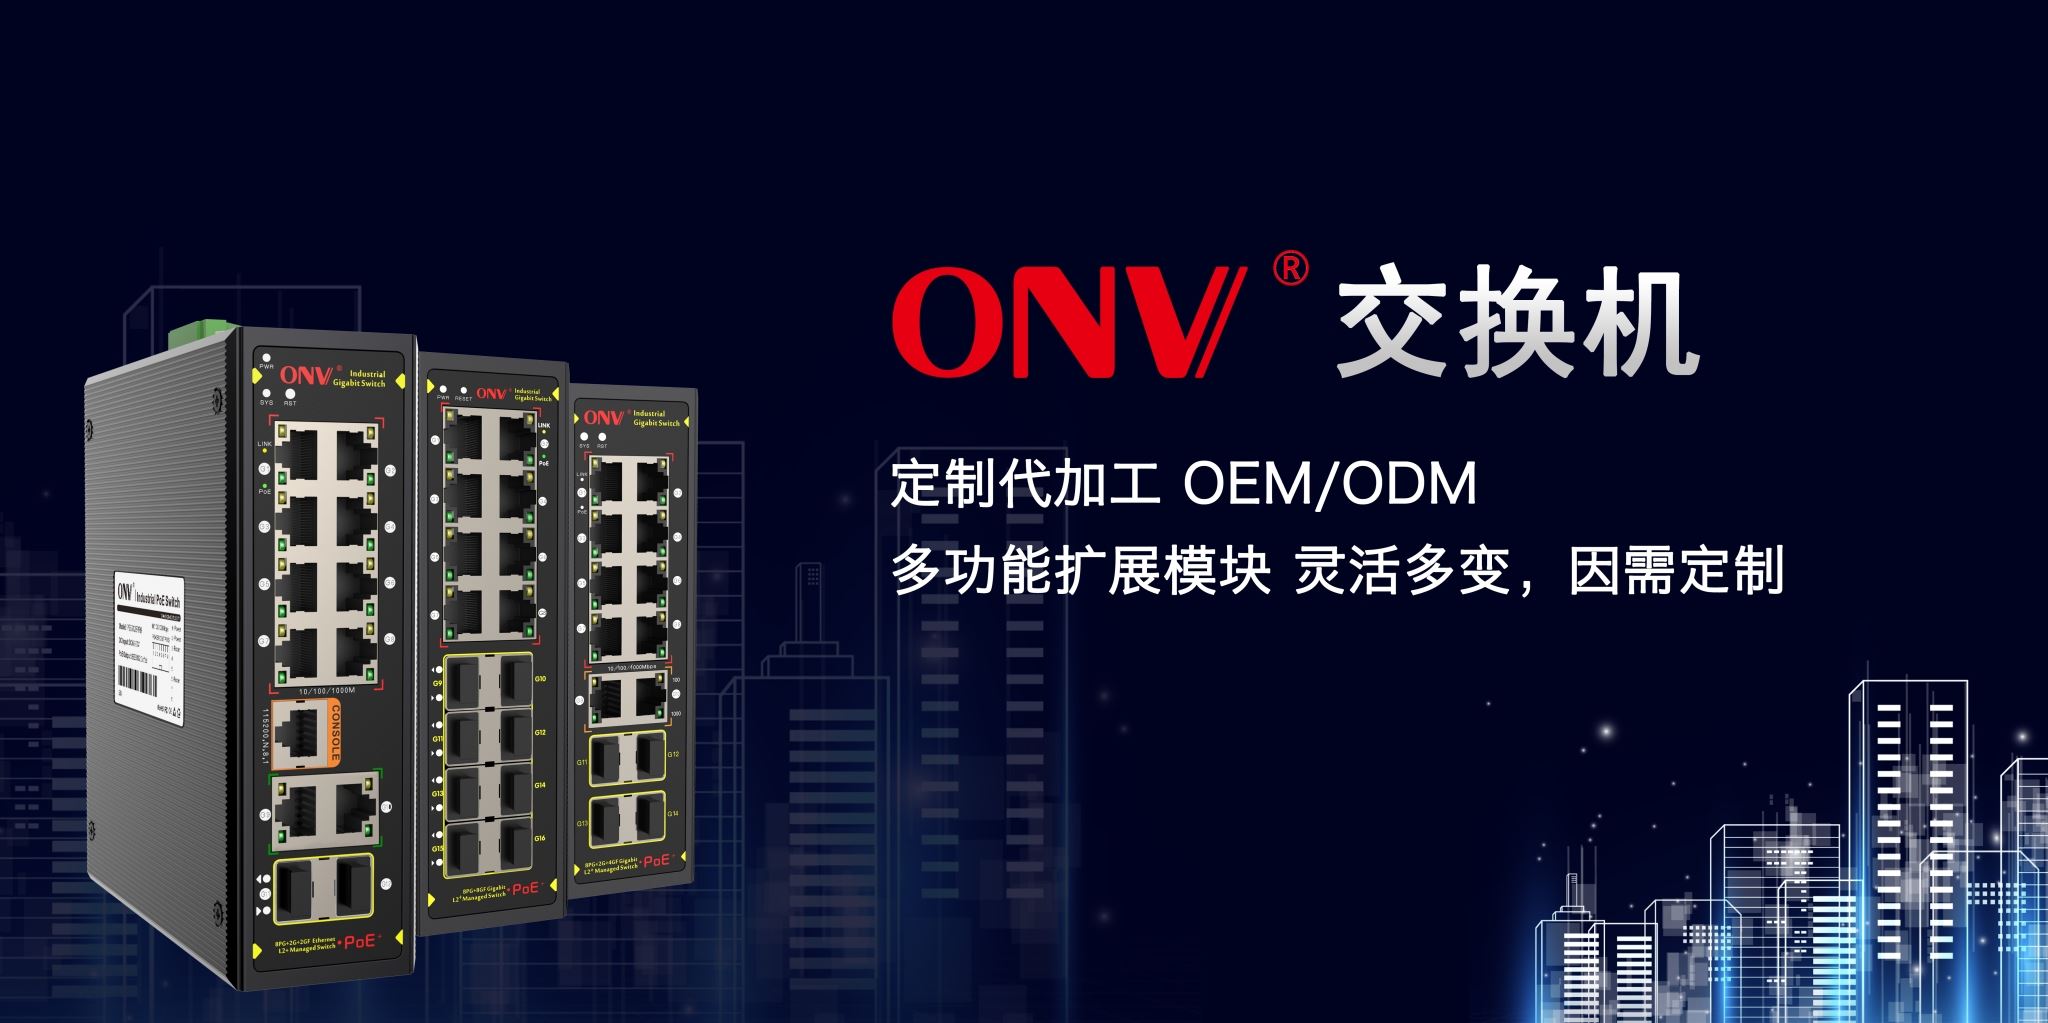 ONV-您的交换机高级定制专家